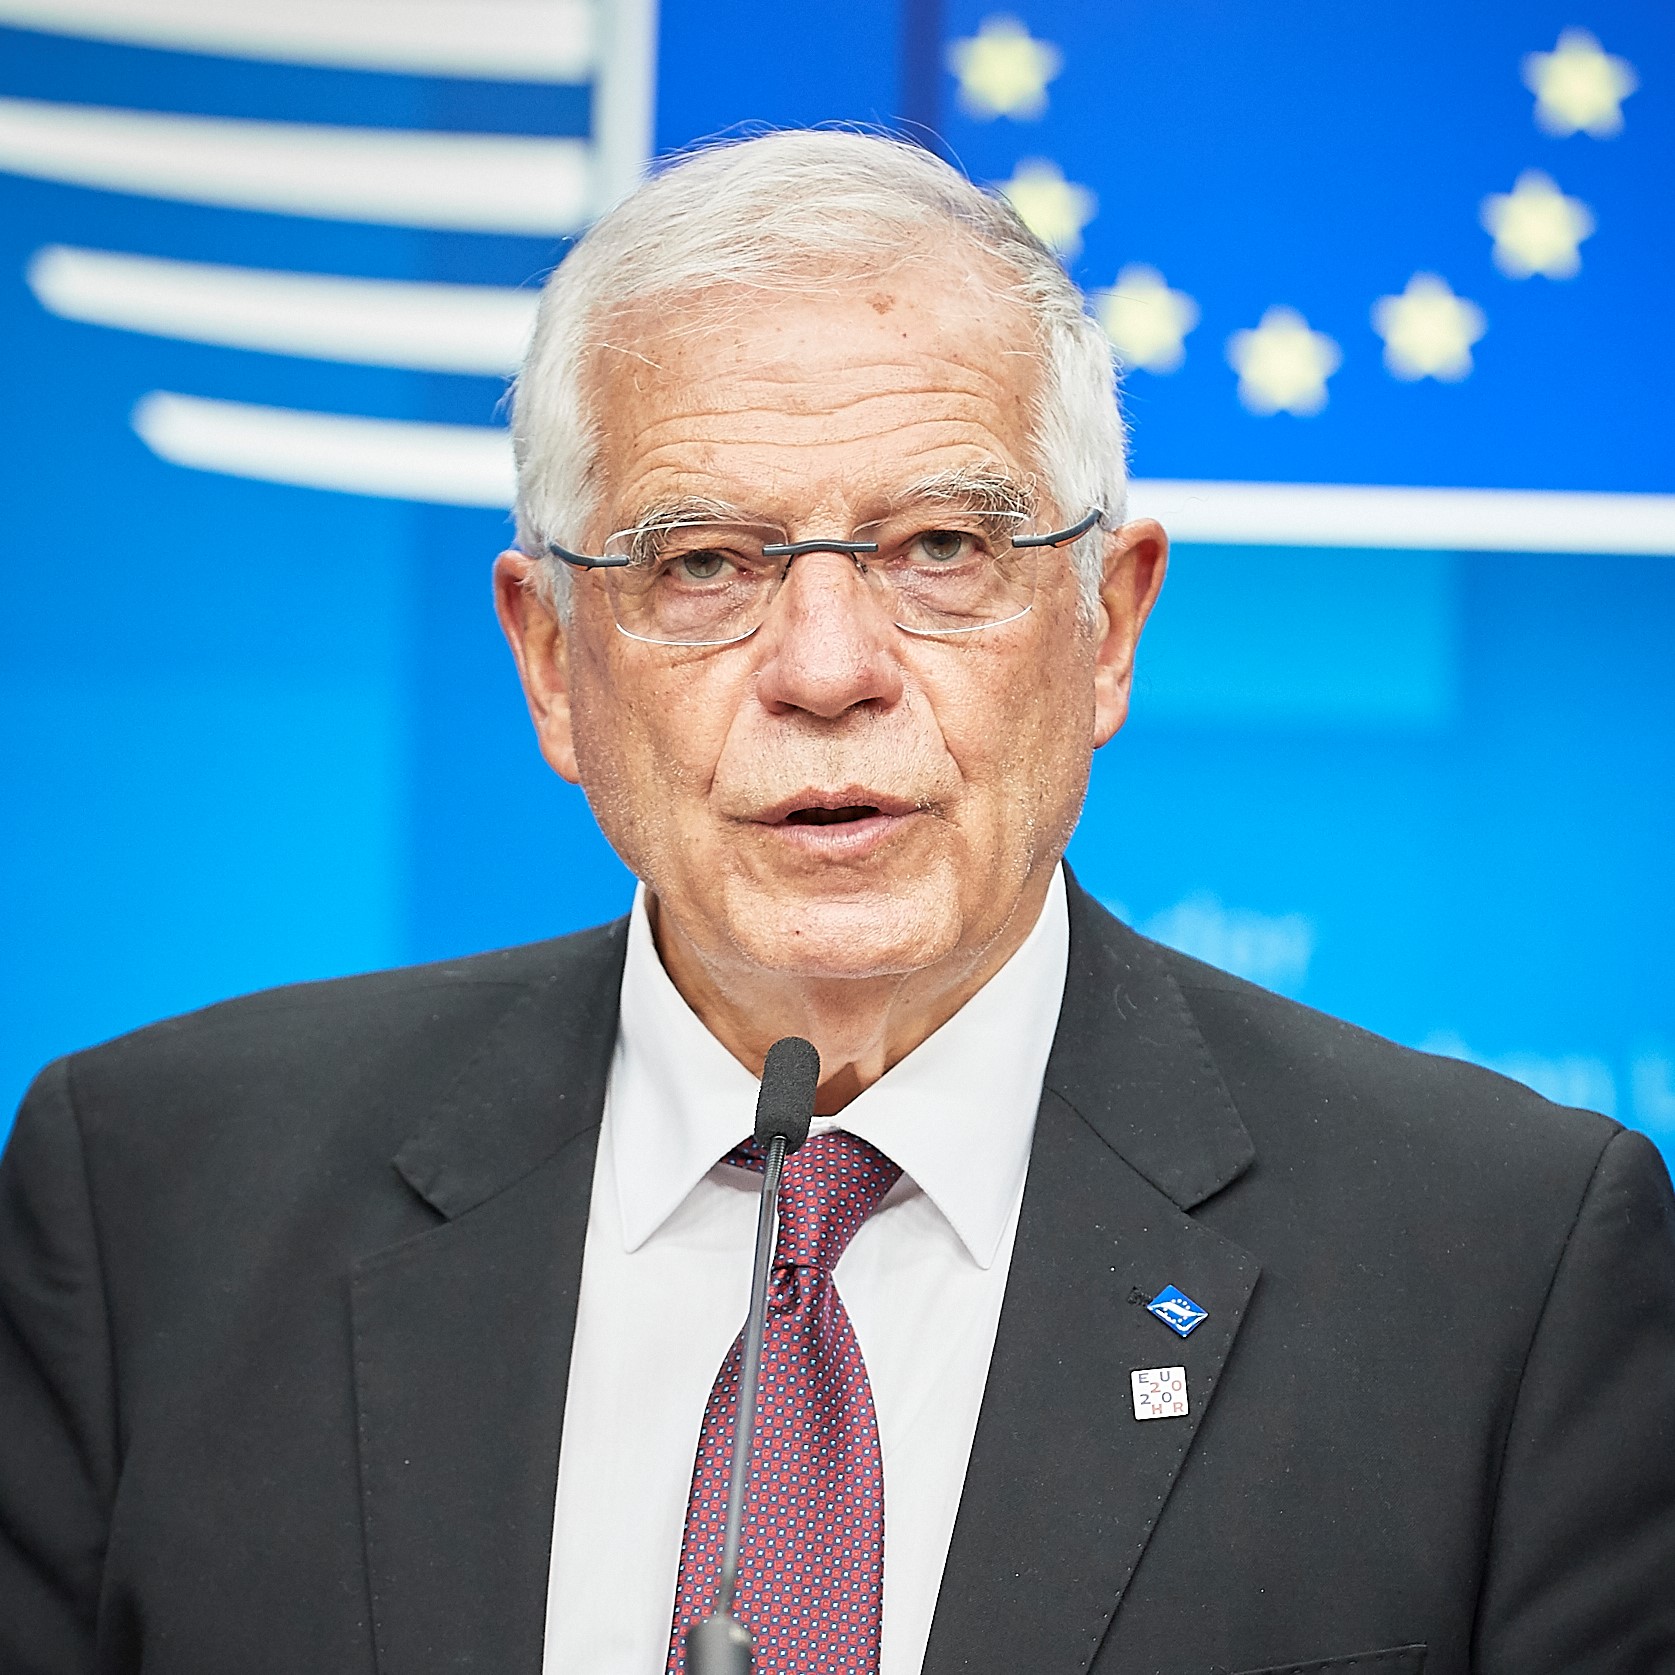 Josep Borrell, High Representative for Foreign Affairs and Security Policy